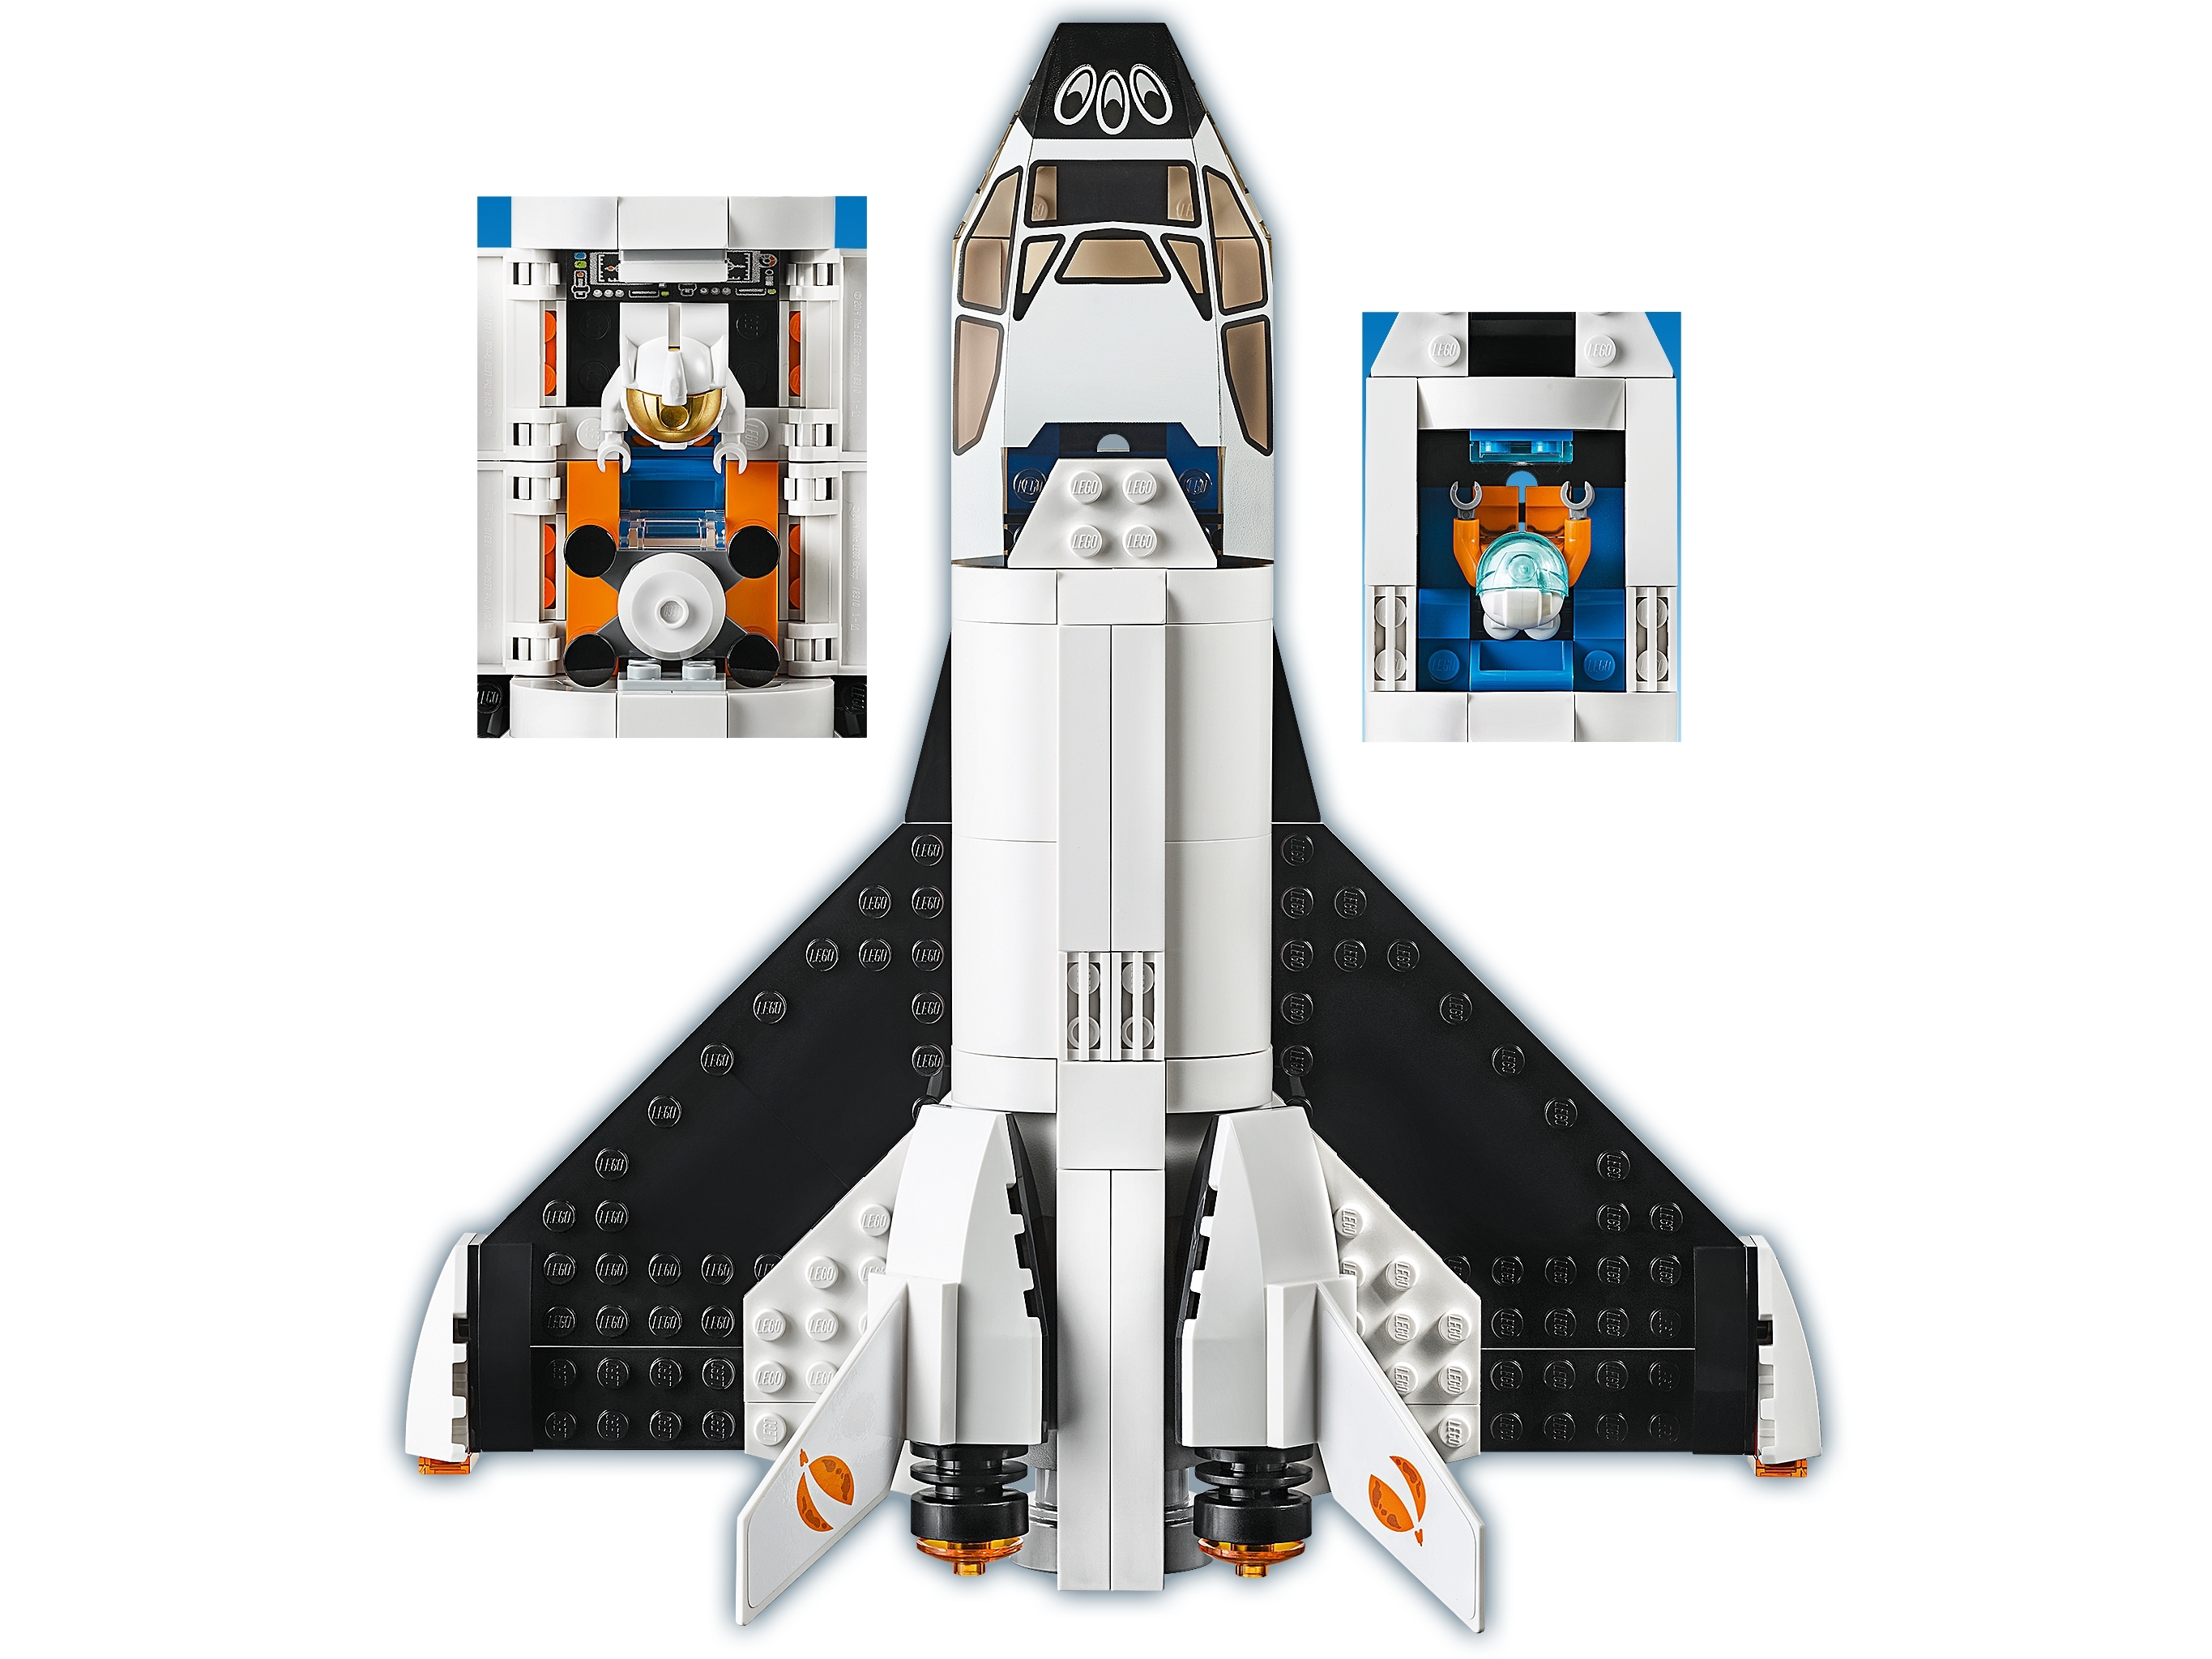 55 LEGO ® City 60226 Mars-Transbordador de Investigación NASA Astronautas N7/19